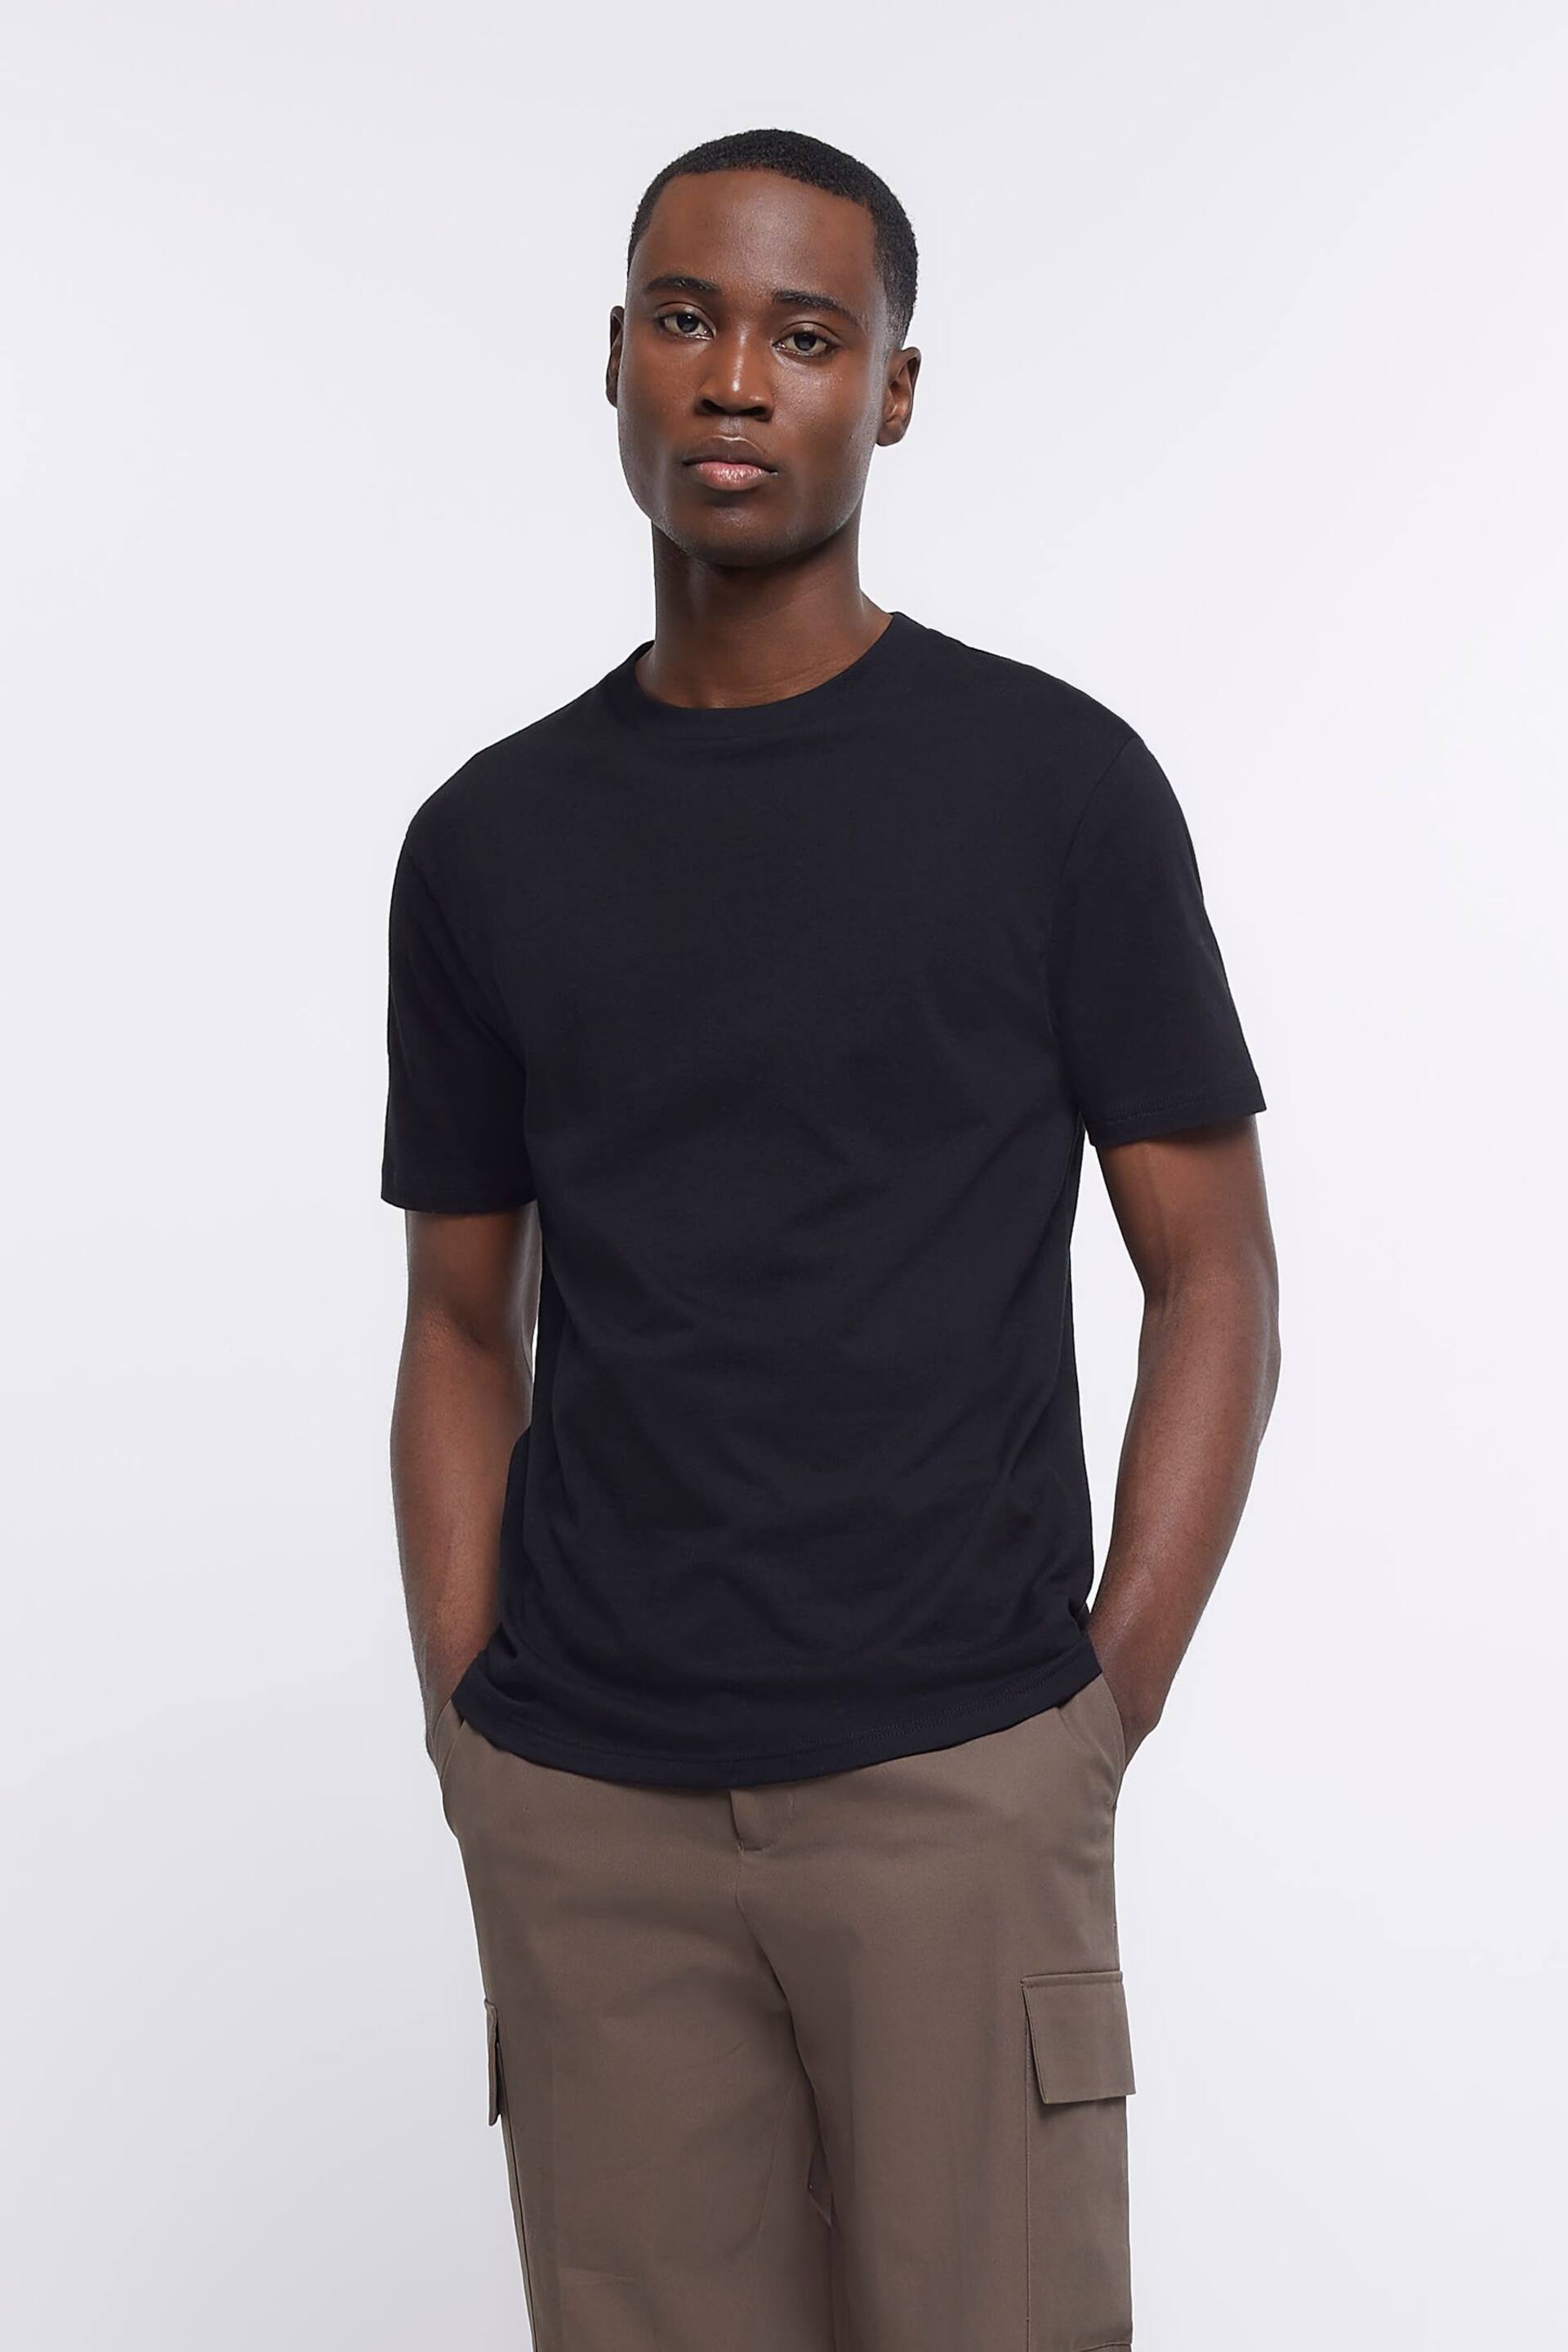 River Island Black Slim Fit T-Shirt - Image 1 of 4